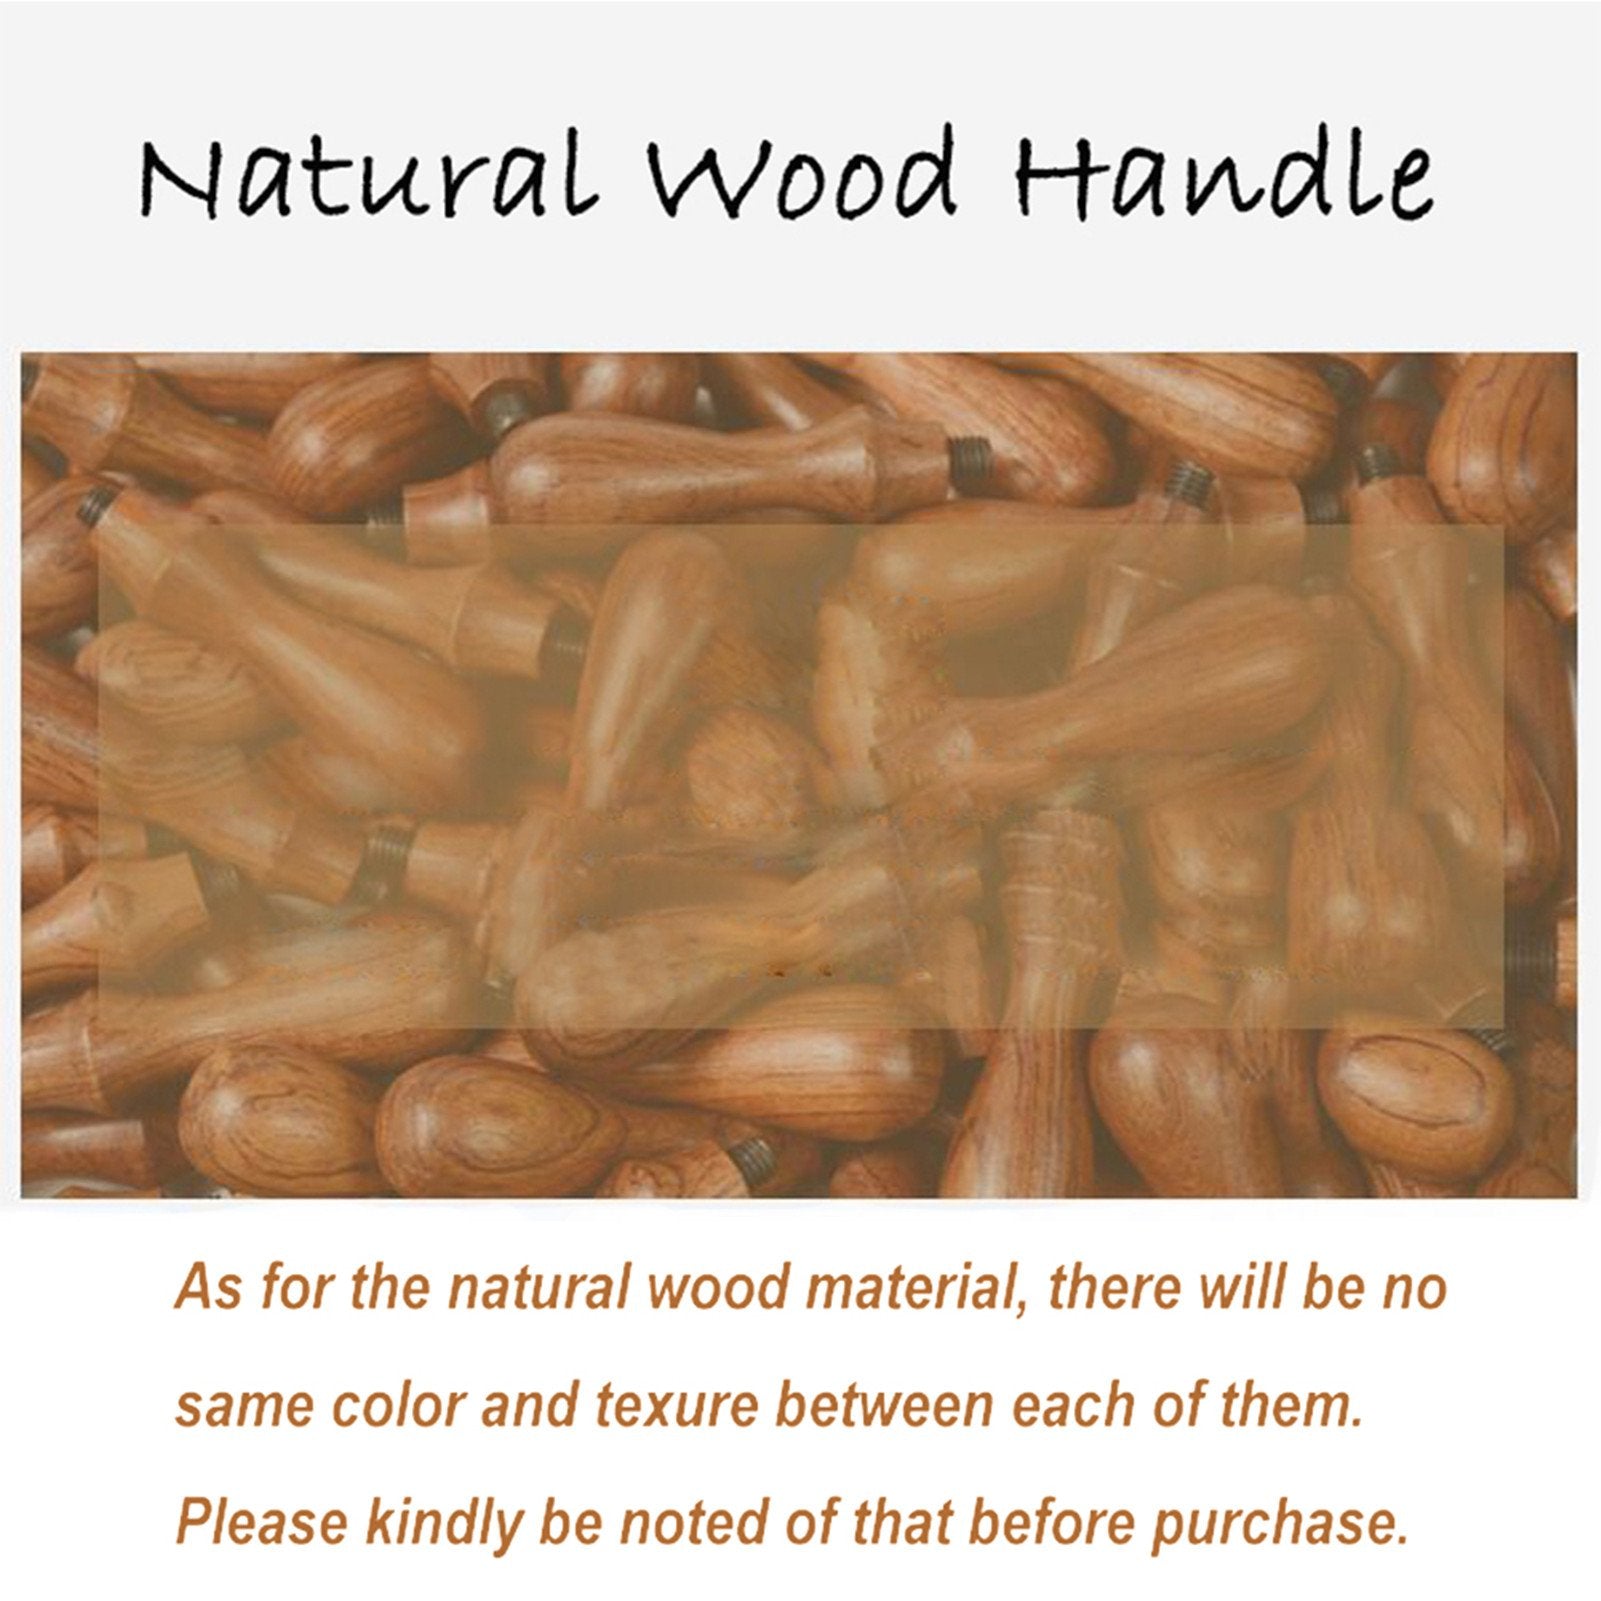 Magnolia Wood Handle Wax Seal Stamp